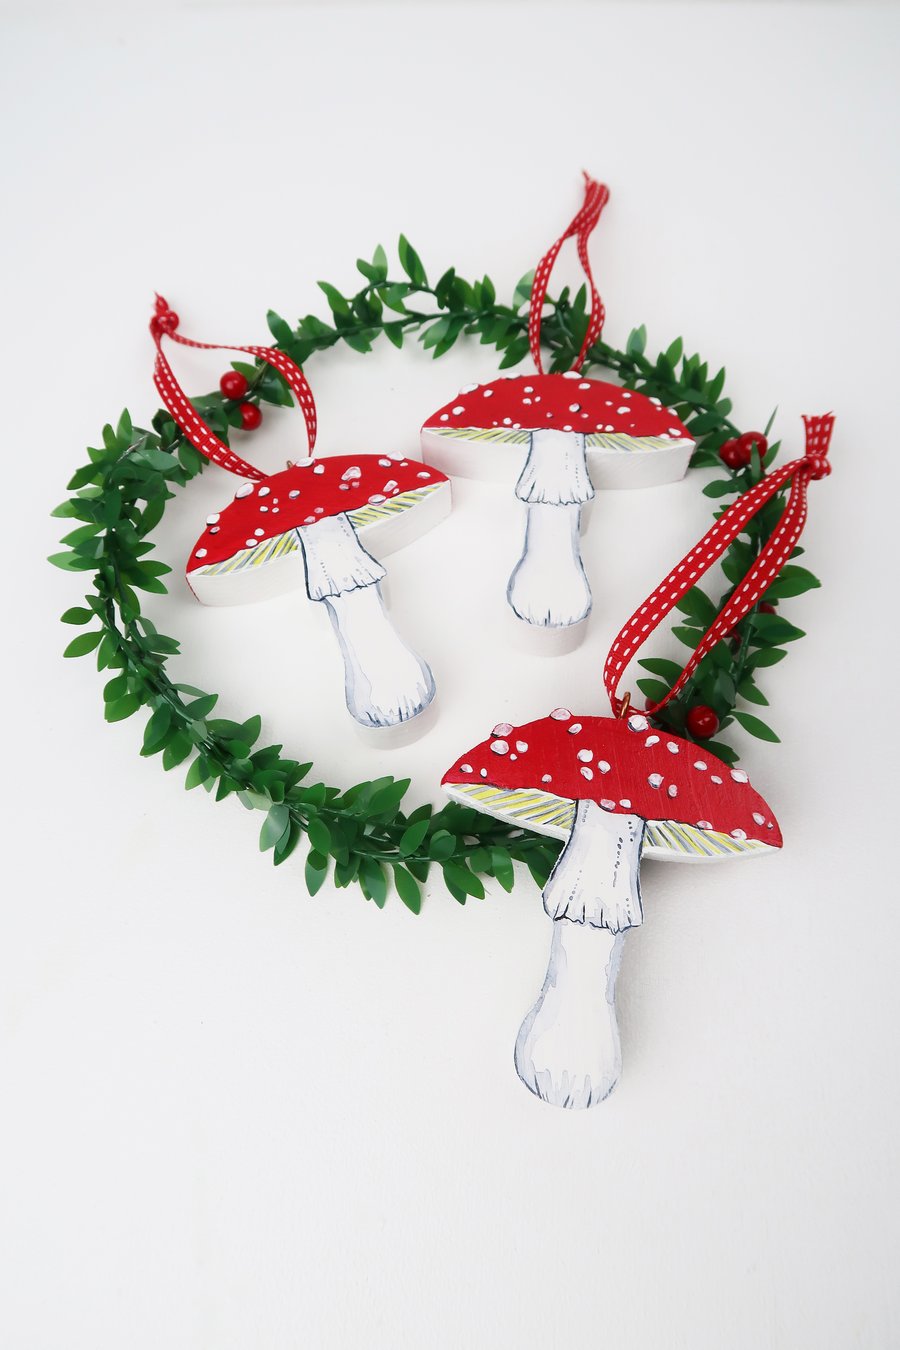 Mushroom hanging ornament, toadstool decoration, set of 3